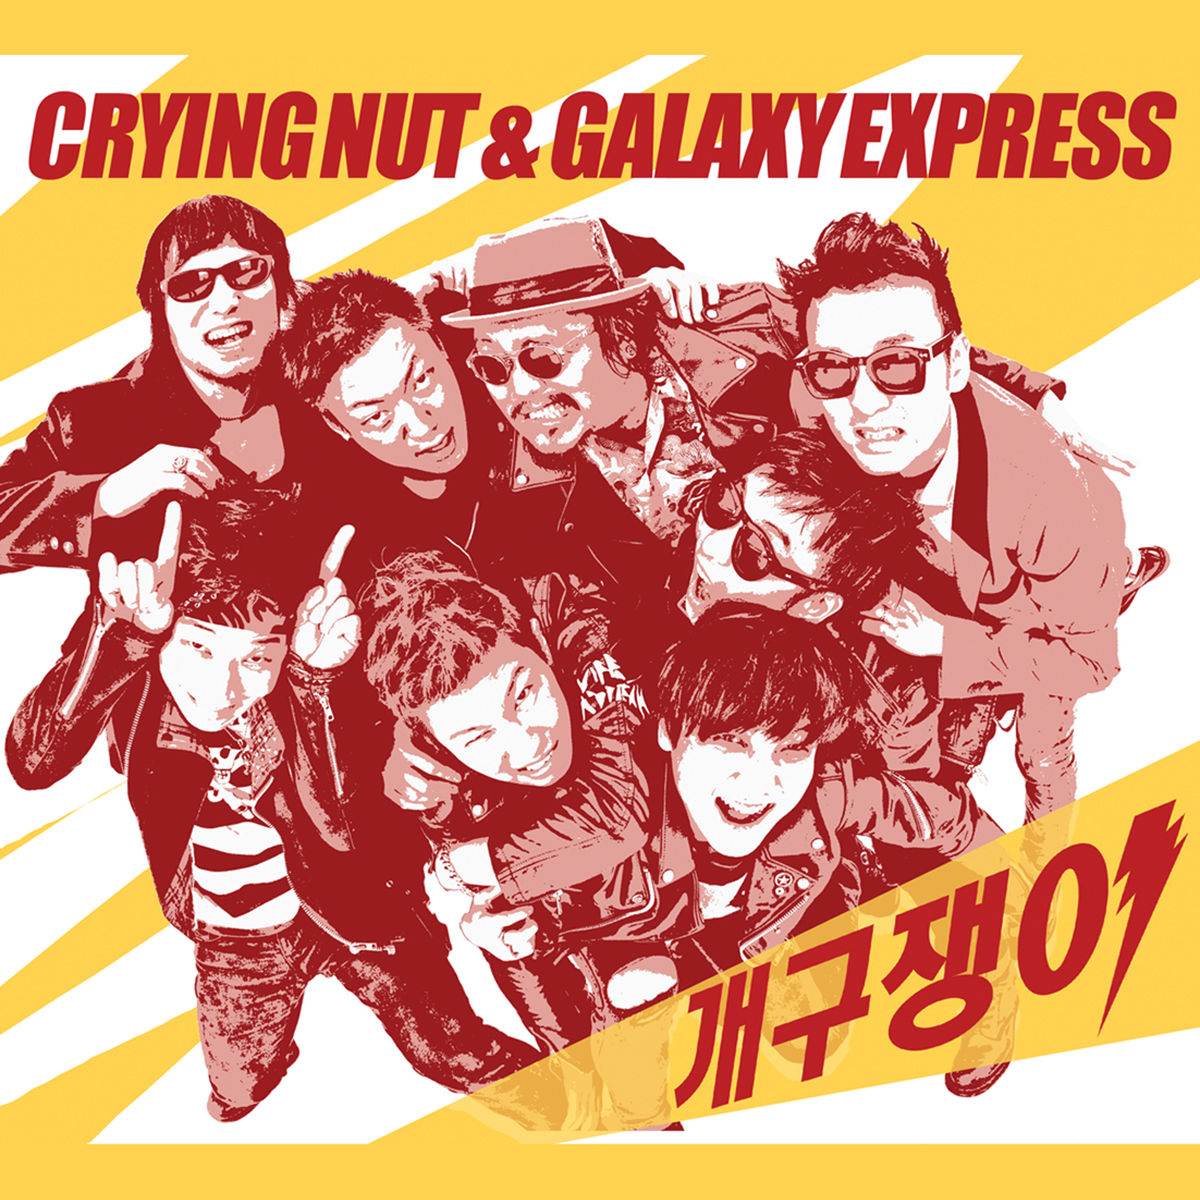 Crying Nut, Galaxy Express – Naughty Boy – EP